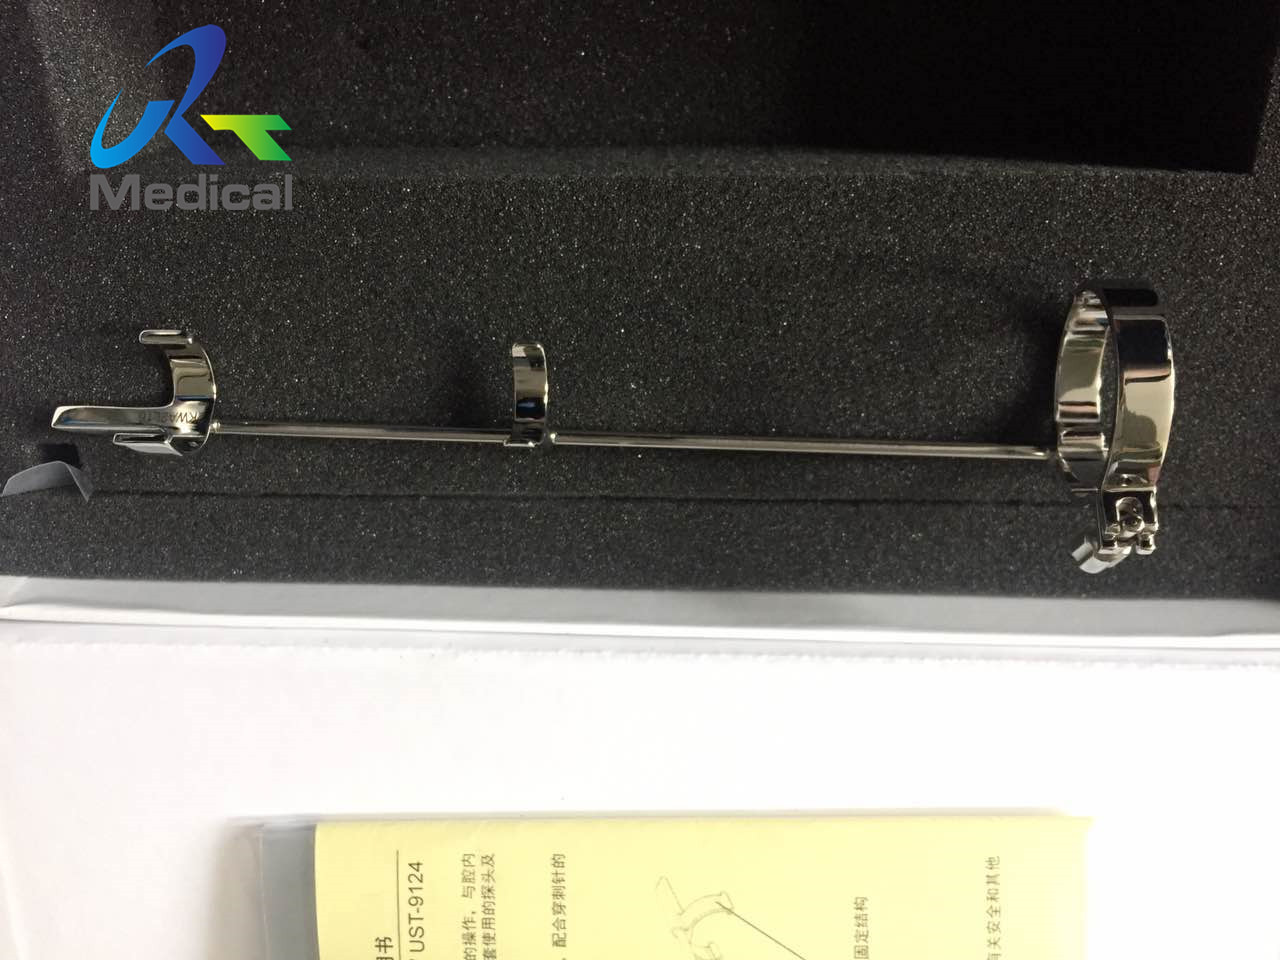  Ultrasound Biopsy Needle Guides for Aloka UST-9118 Transducer